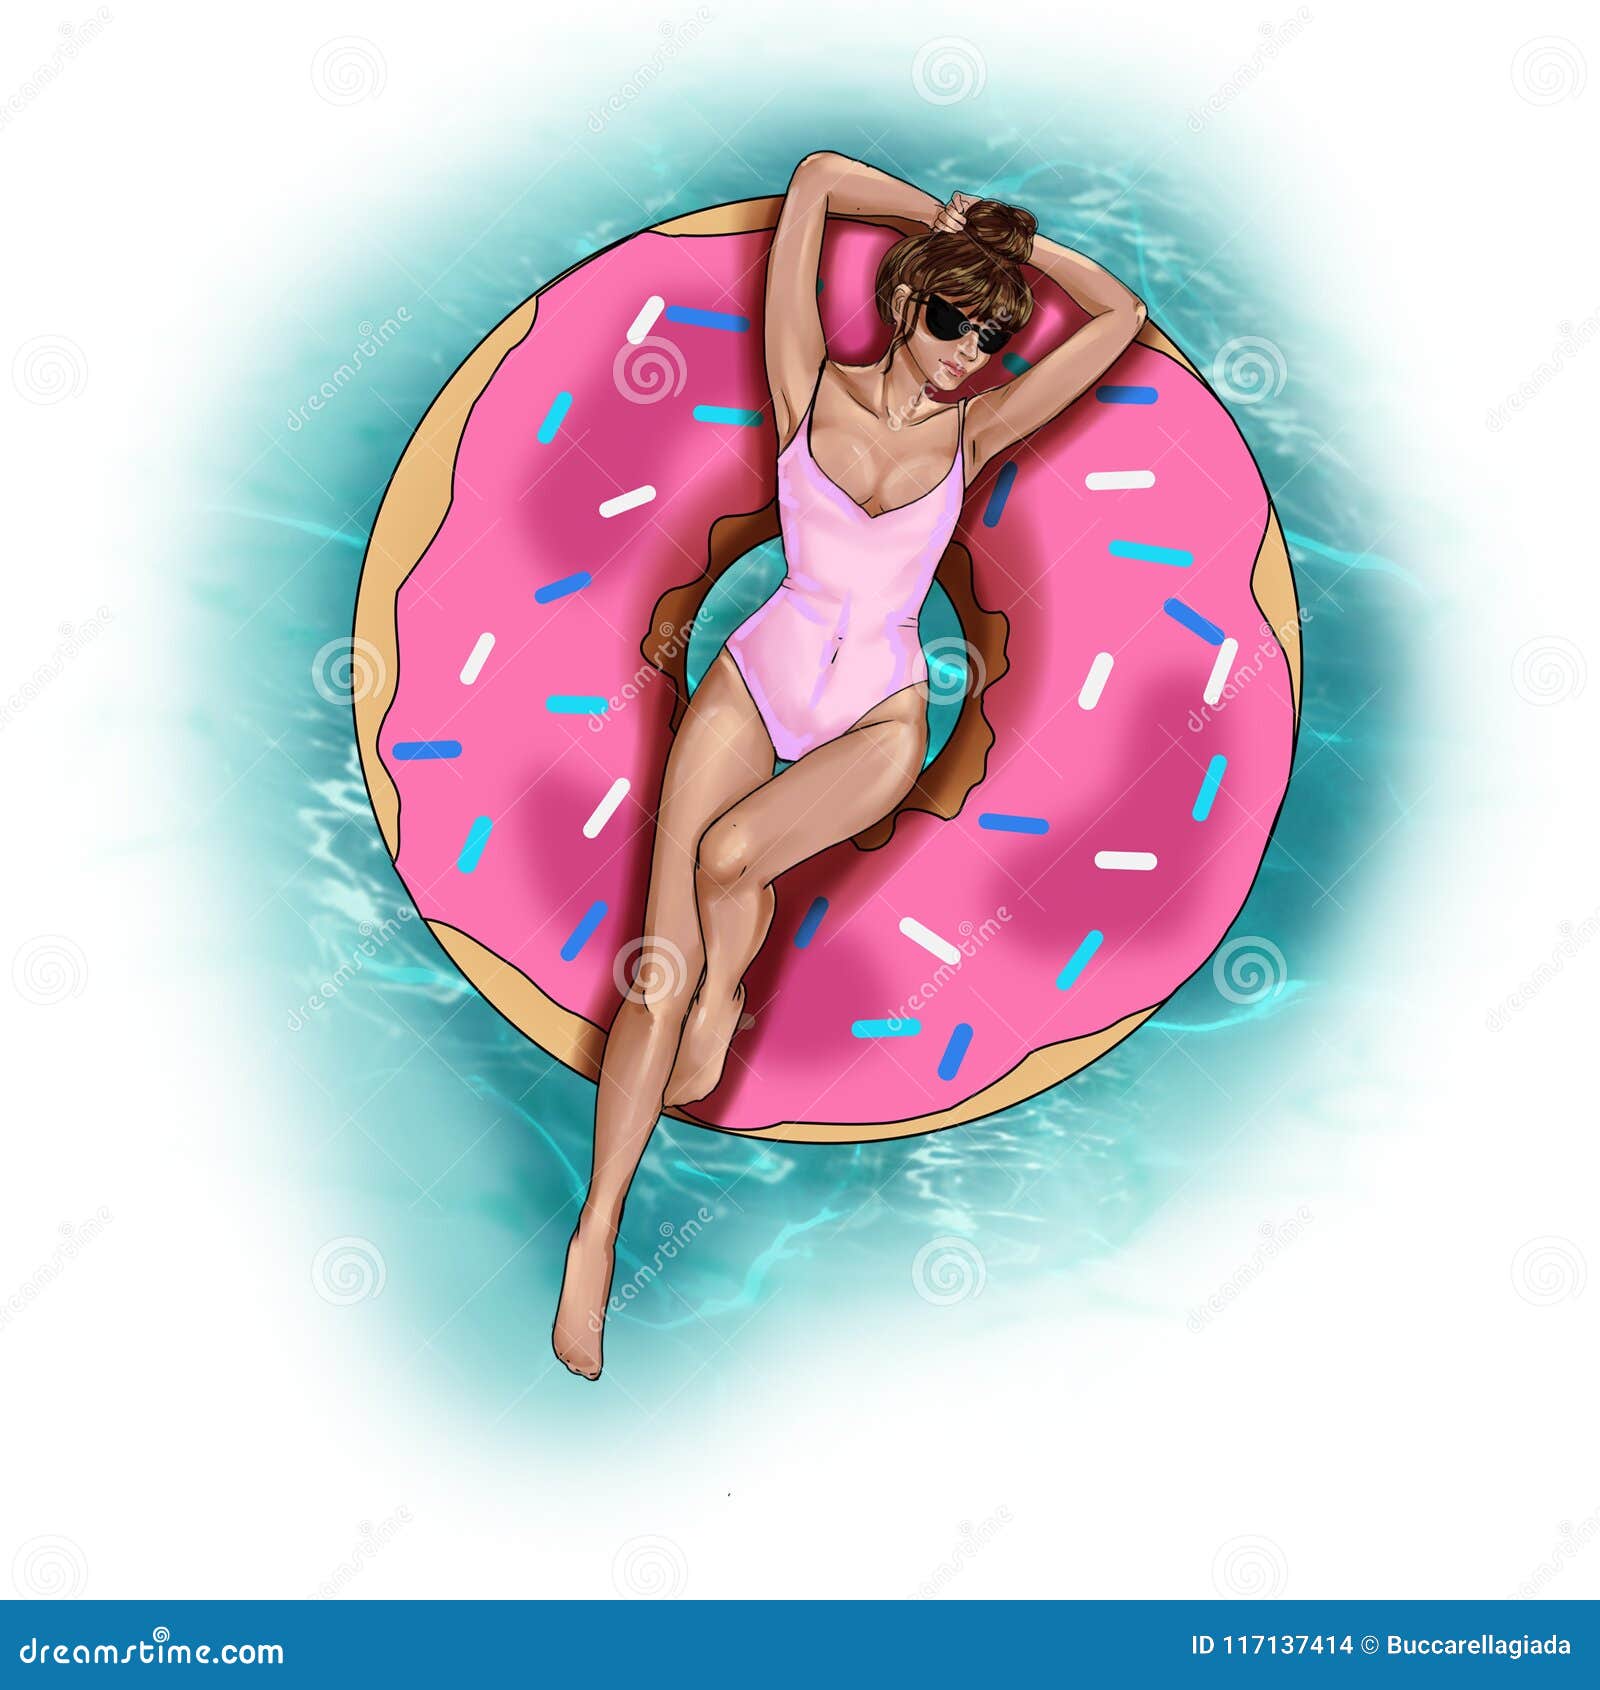 fashion  - hand drawn raster image - girl on donut pool float